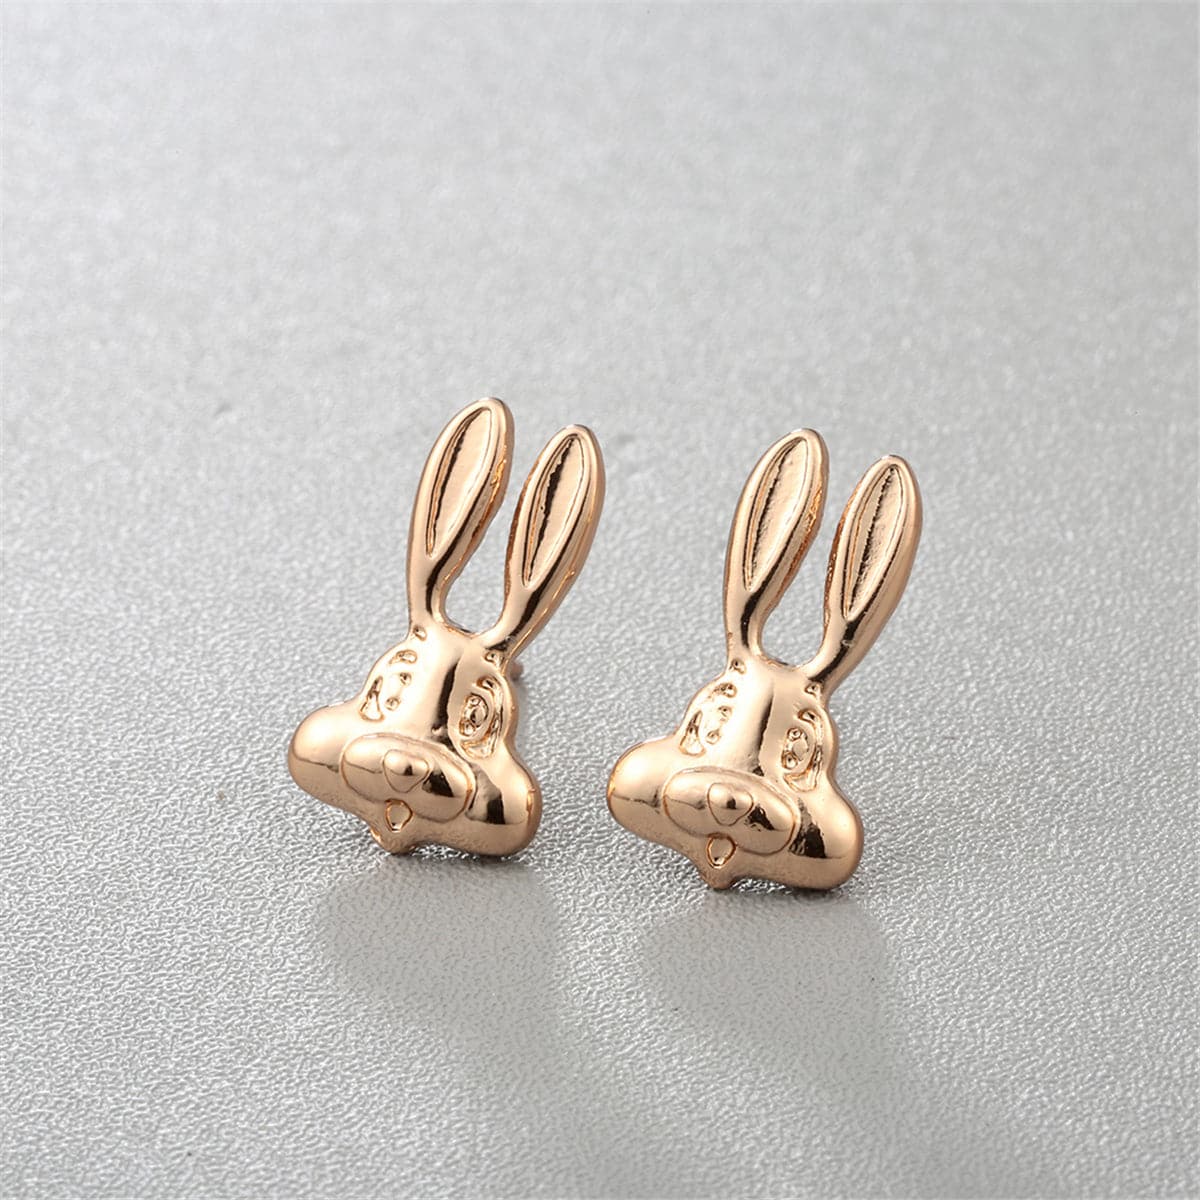 18K Gold-Plated Rabbit Stud Earrings